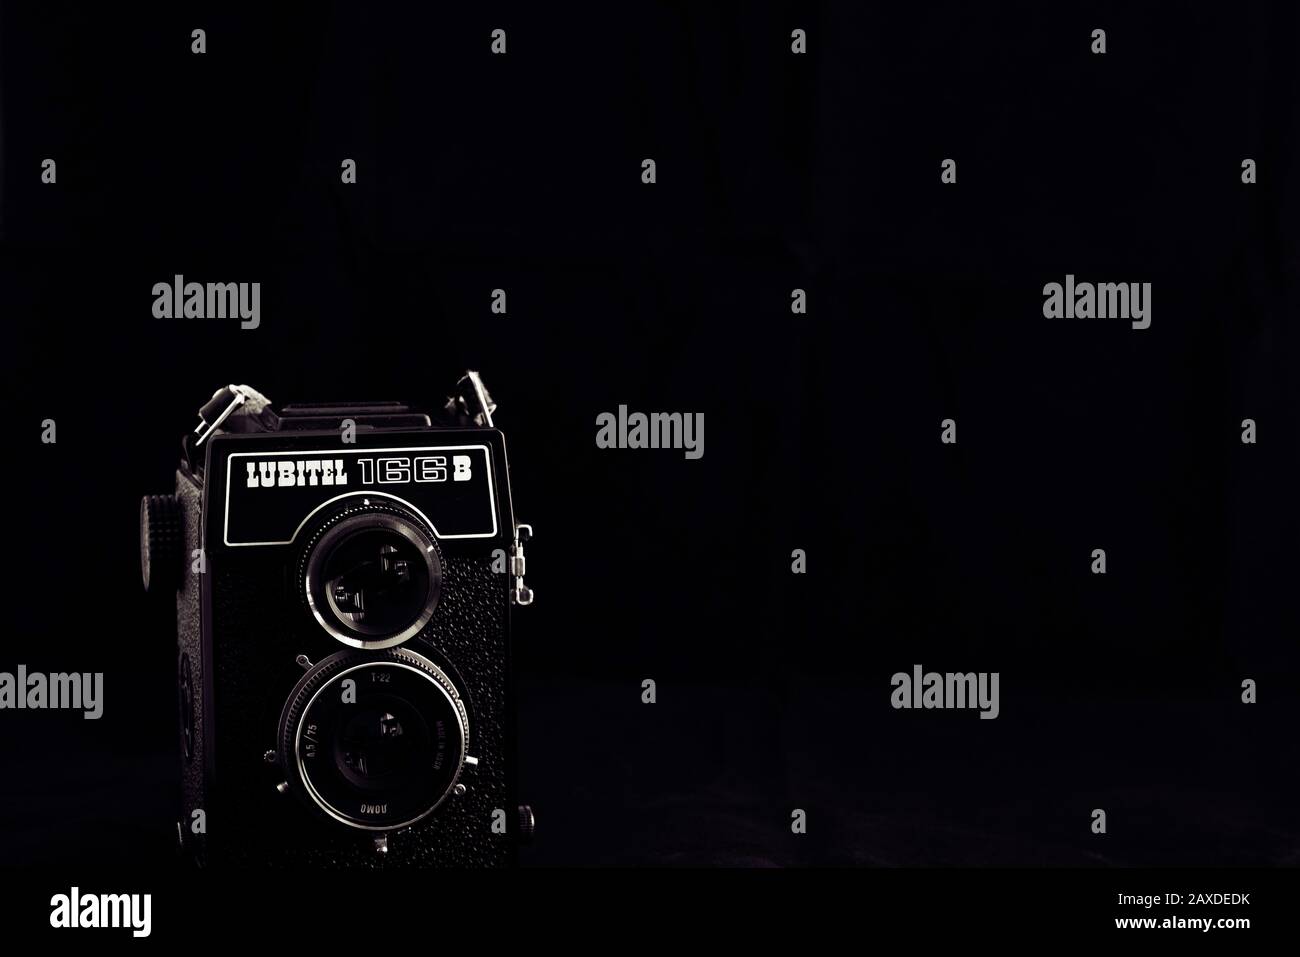 Vintage twin-lens reflex camera, Lubitel 166B, against a dark background. Stock Photo